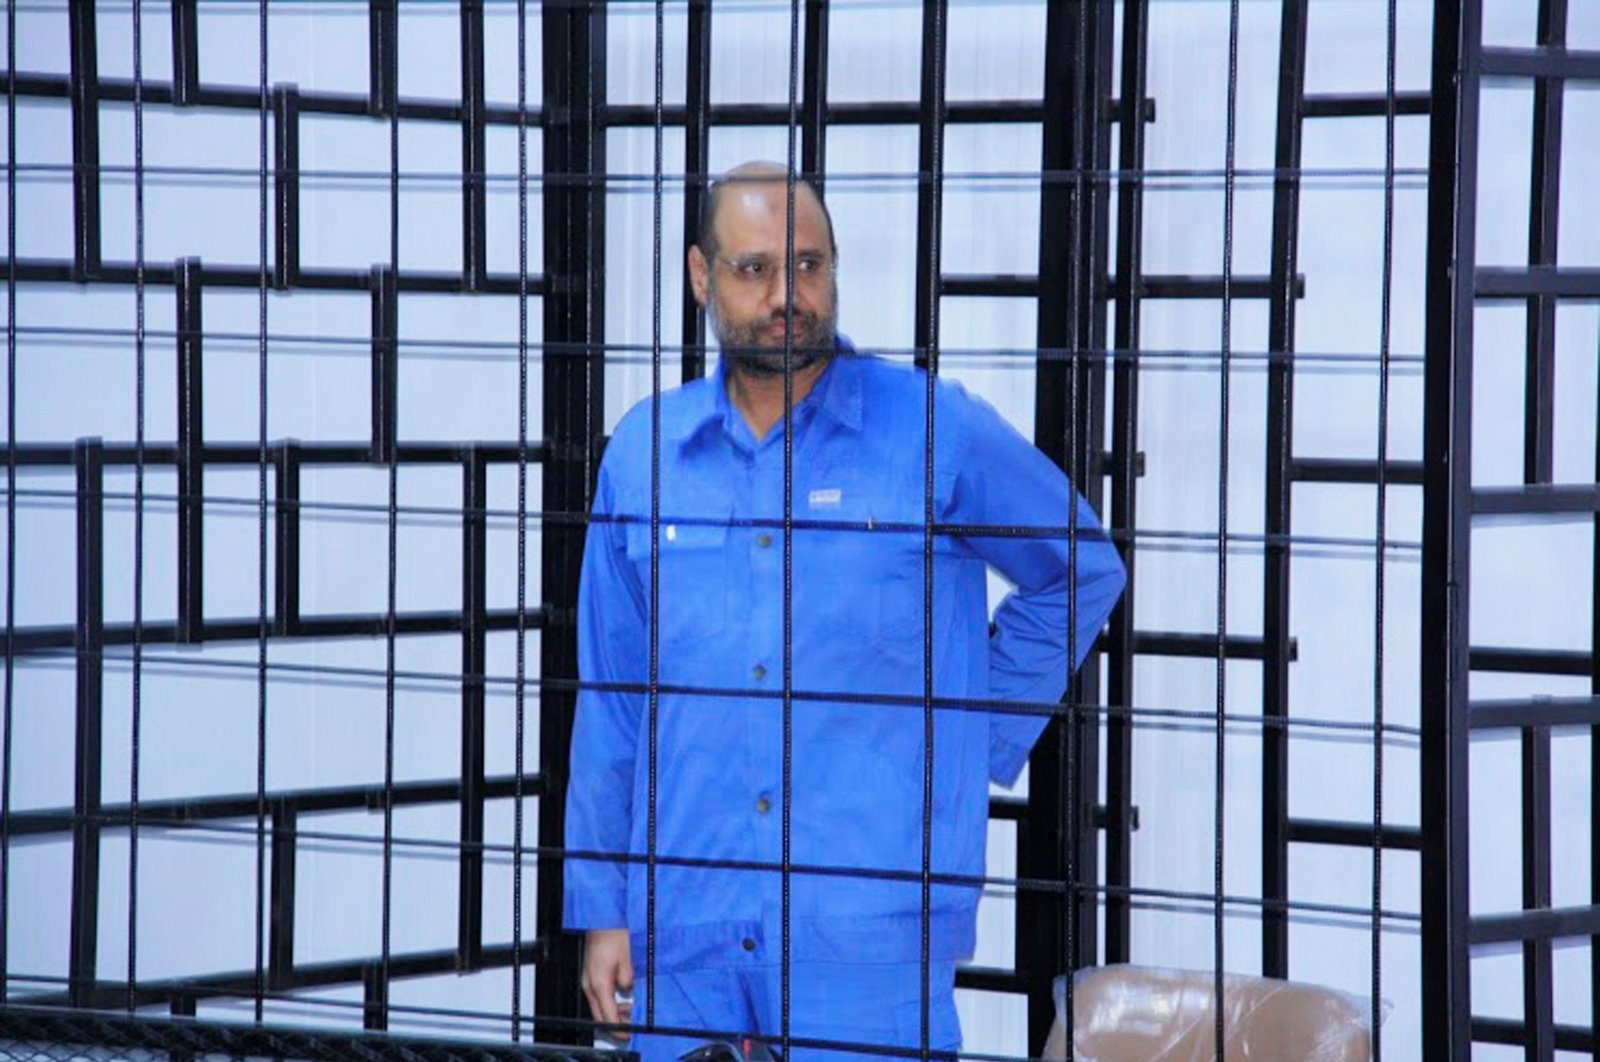 Saif al-Islam Gahdafi, son of late Libyan leader Moammar Gadhafi, attends a hearing behind bars in a courtroom in Zintan, June 22, 2014 . (REUTERS Photo)